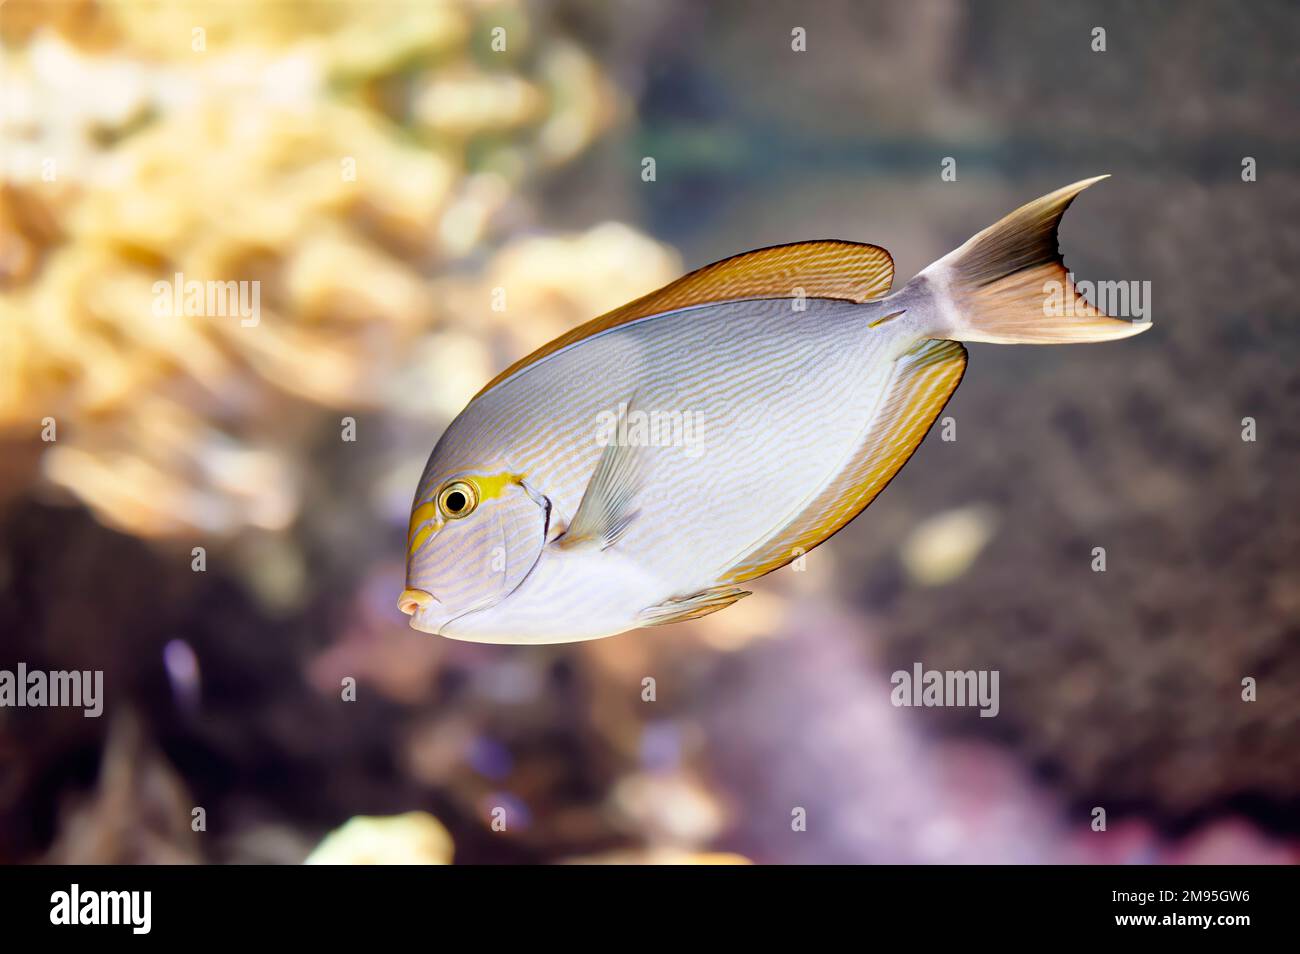 Elongated surgeonfish (Acanthurus mata), tropical marine fish swimming near marine vegetation in an aquarium Stock Photo